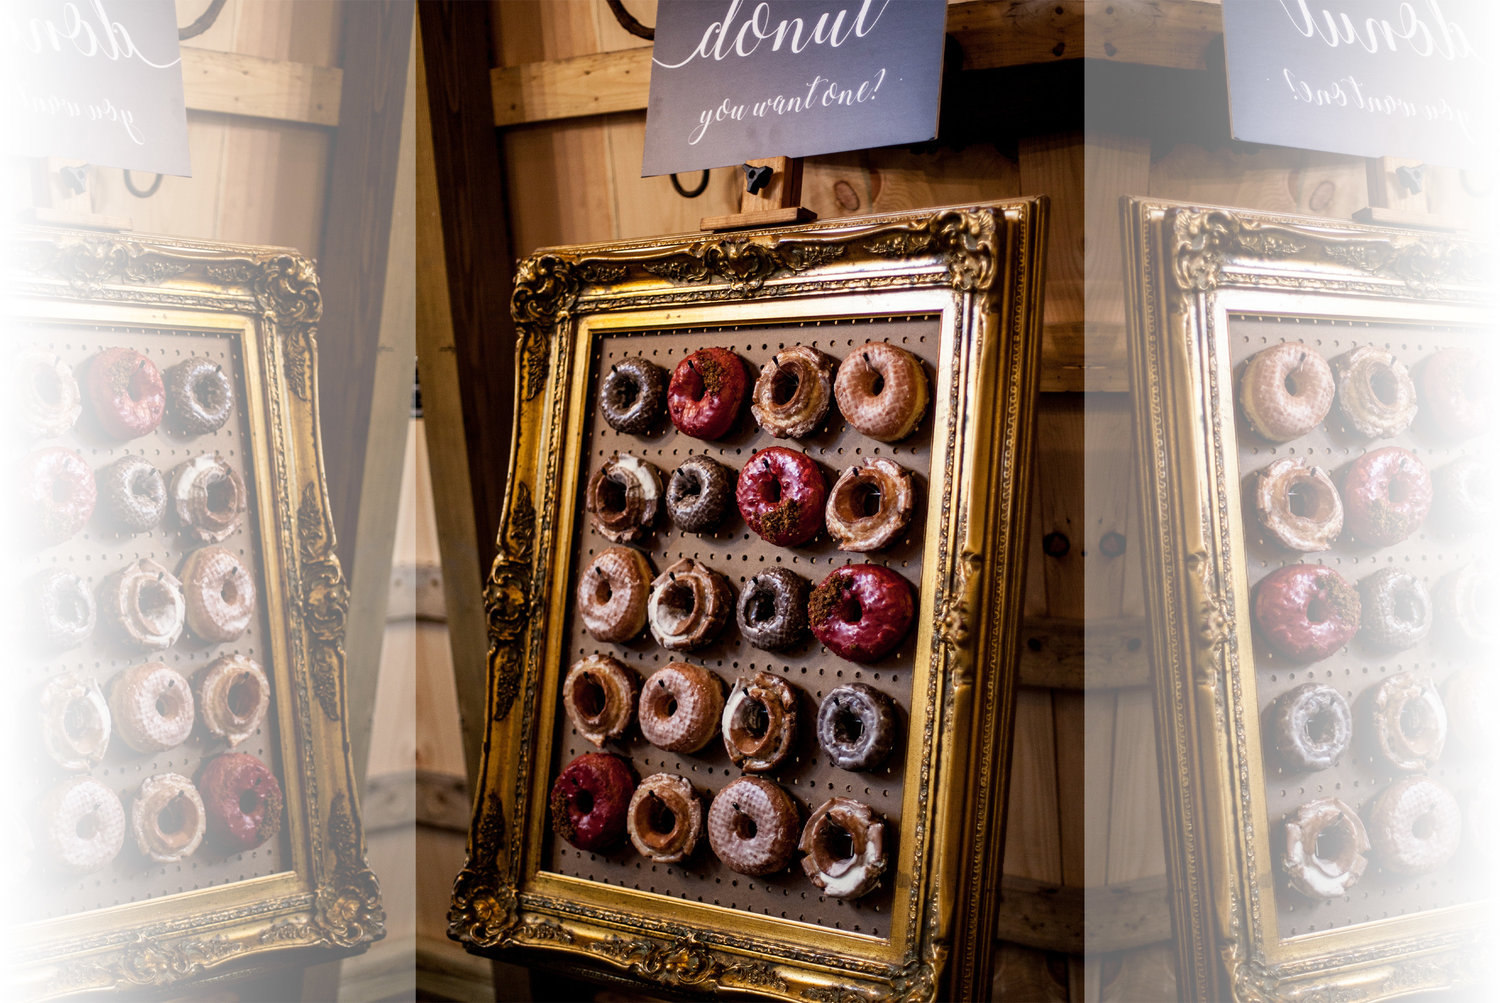 A donut wall by KNEAD Doughnuts